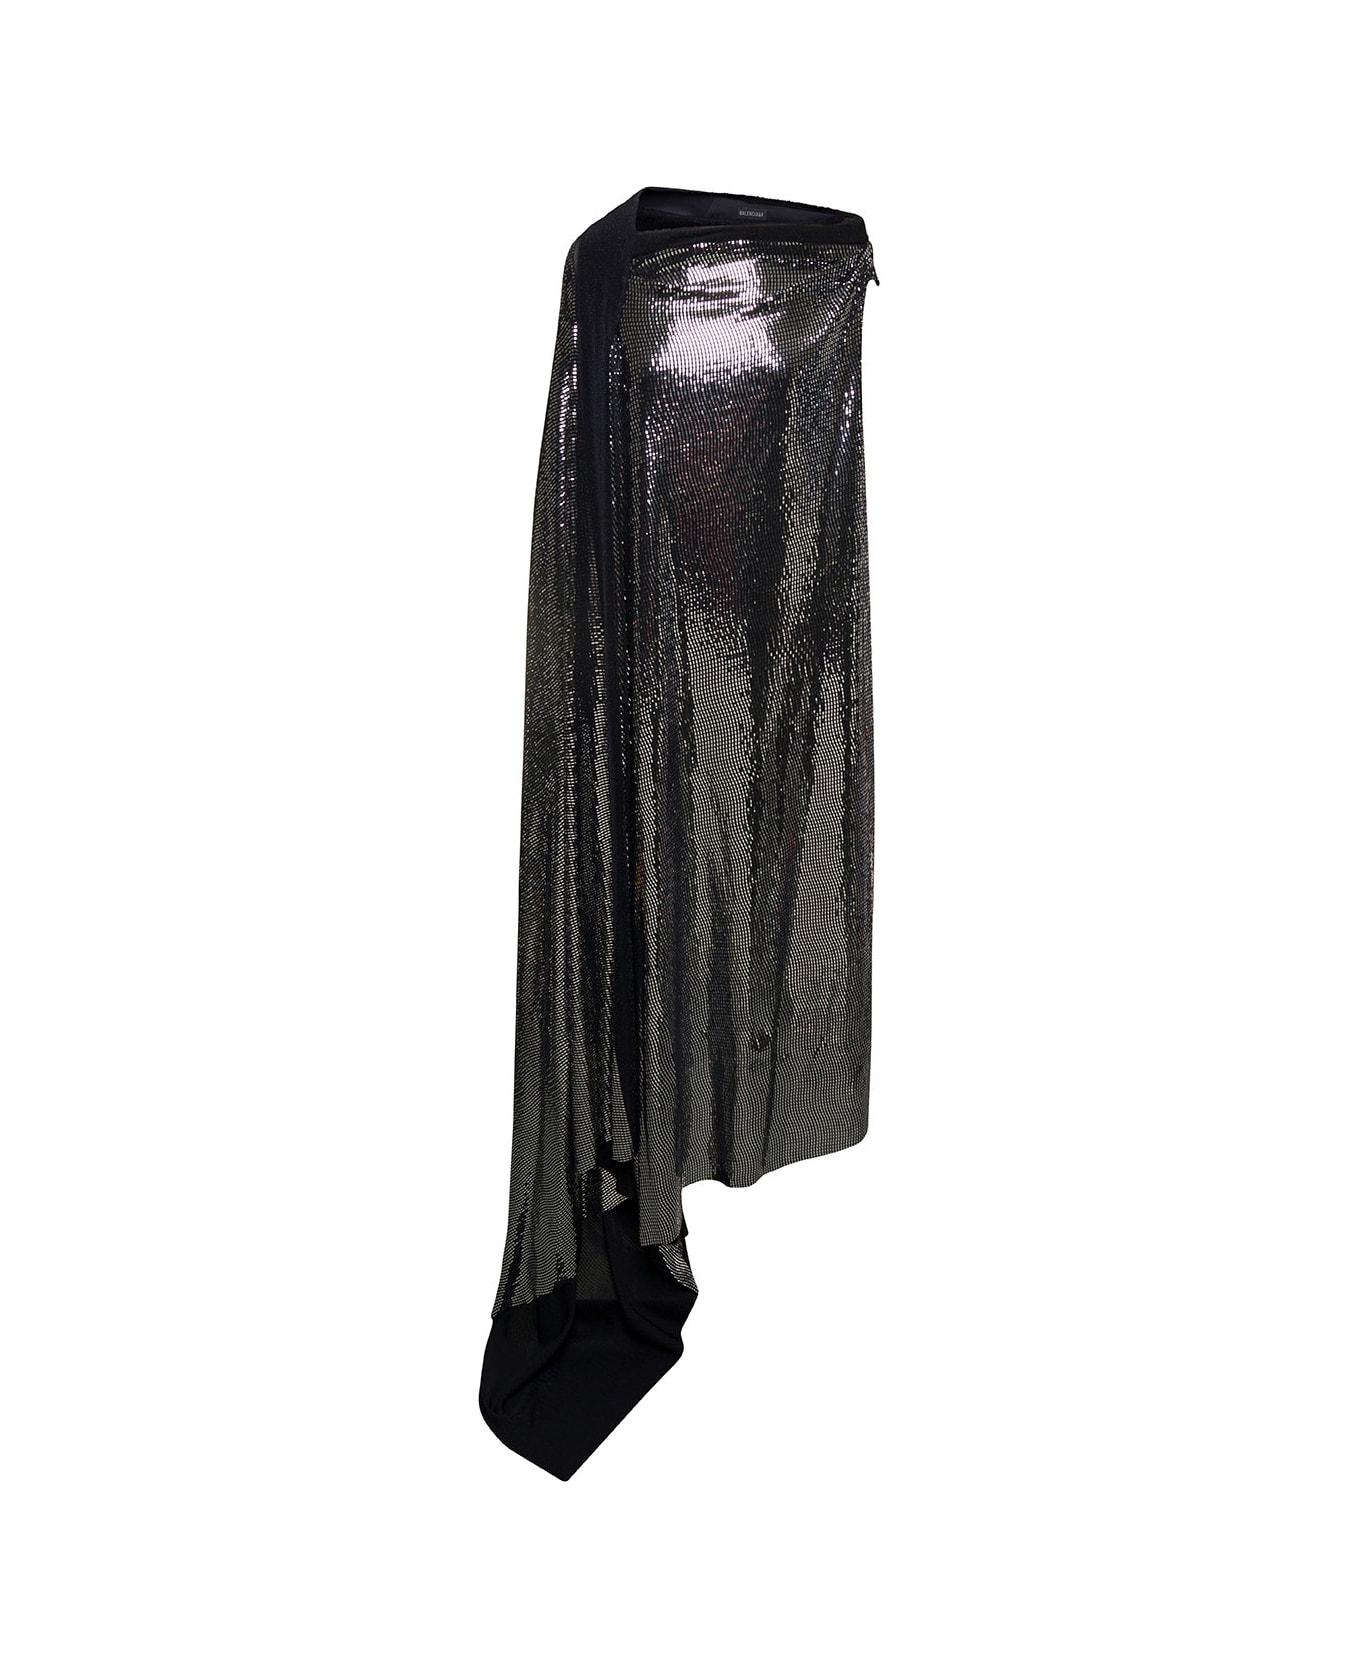 Balenciaga 'minimal' Black And Silver Draped Sleeveless Gown In Metallic Jersey Woman - Metallic